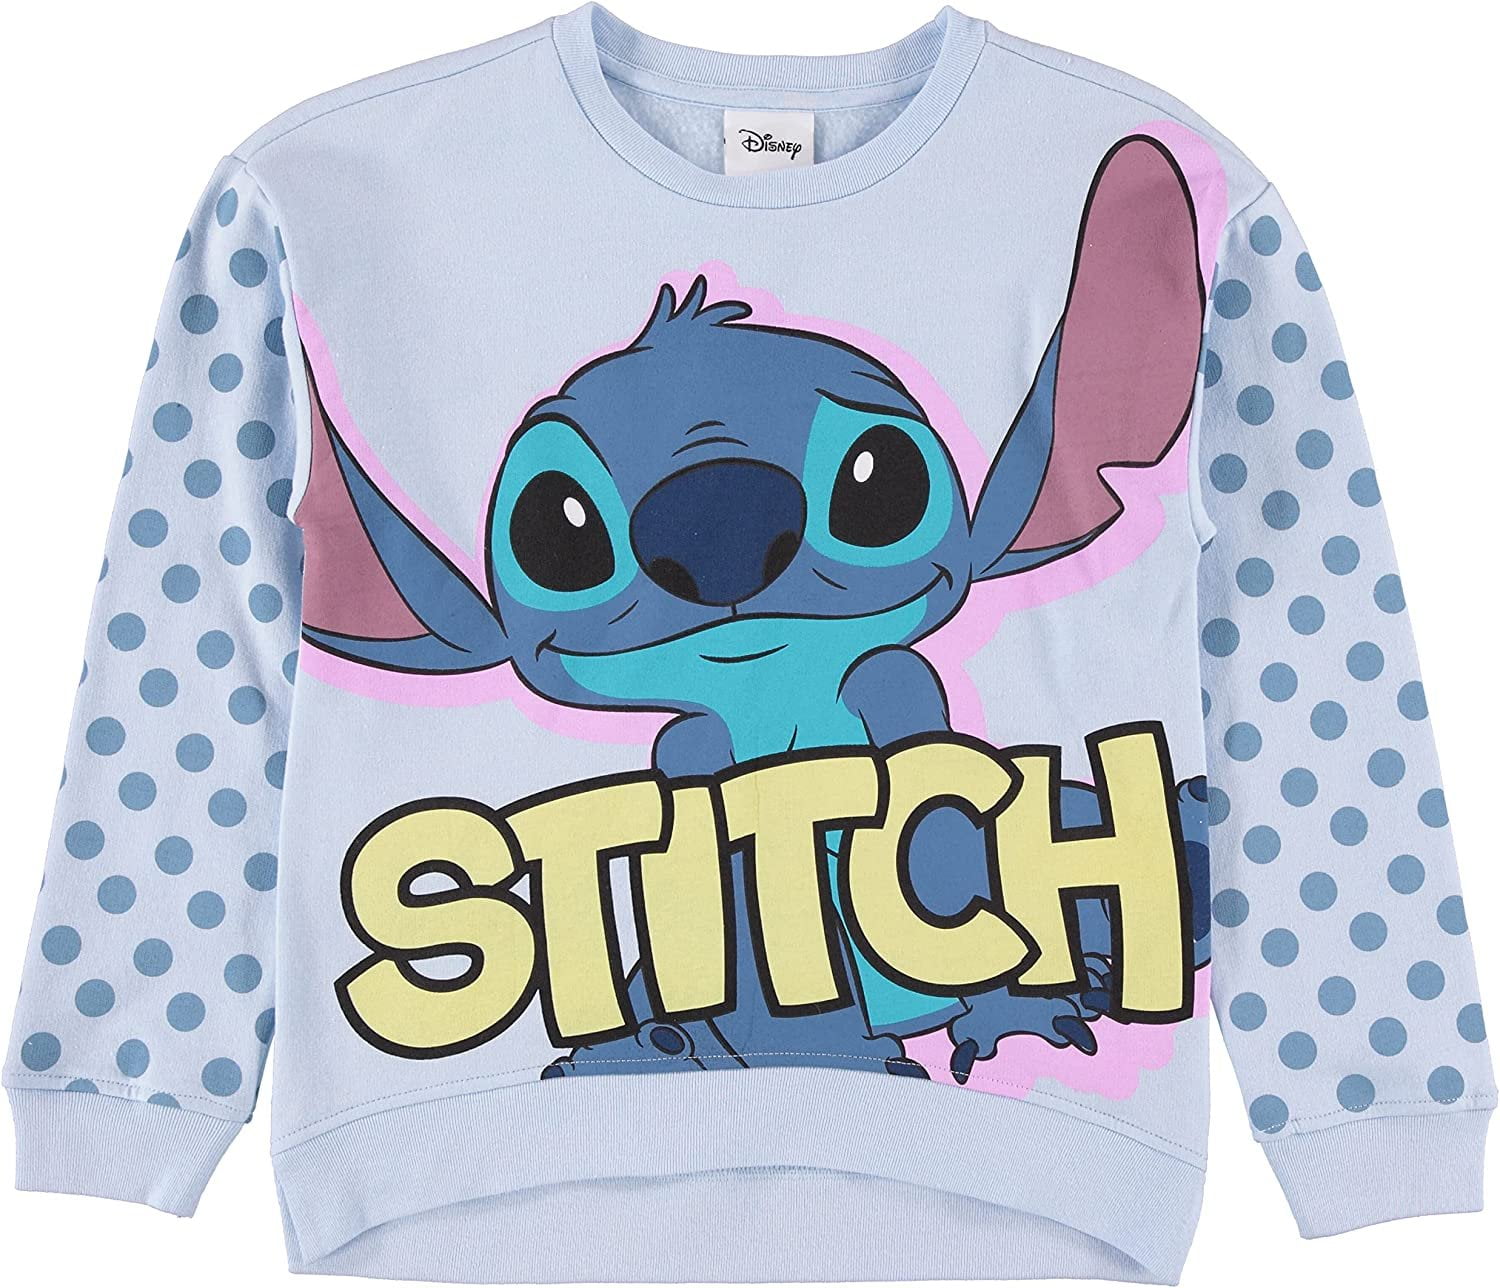 Disney Stitch Embroidered Sweatshirt - Medium